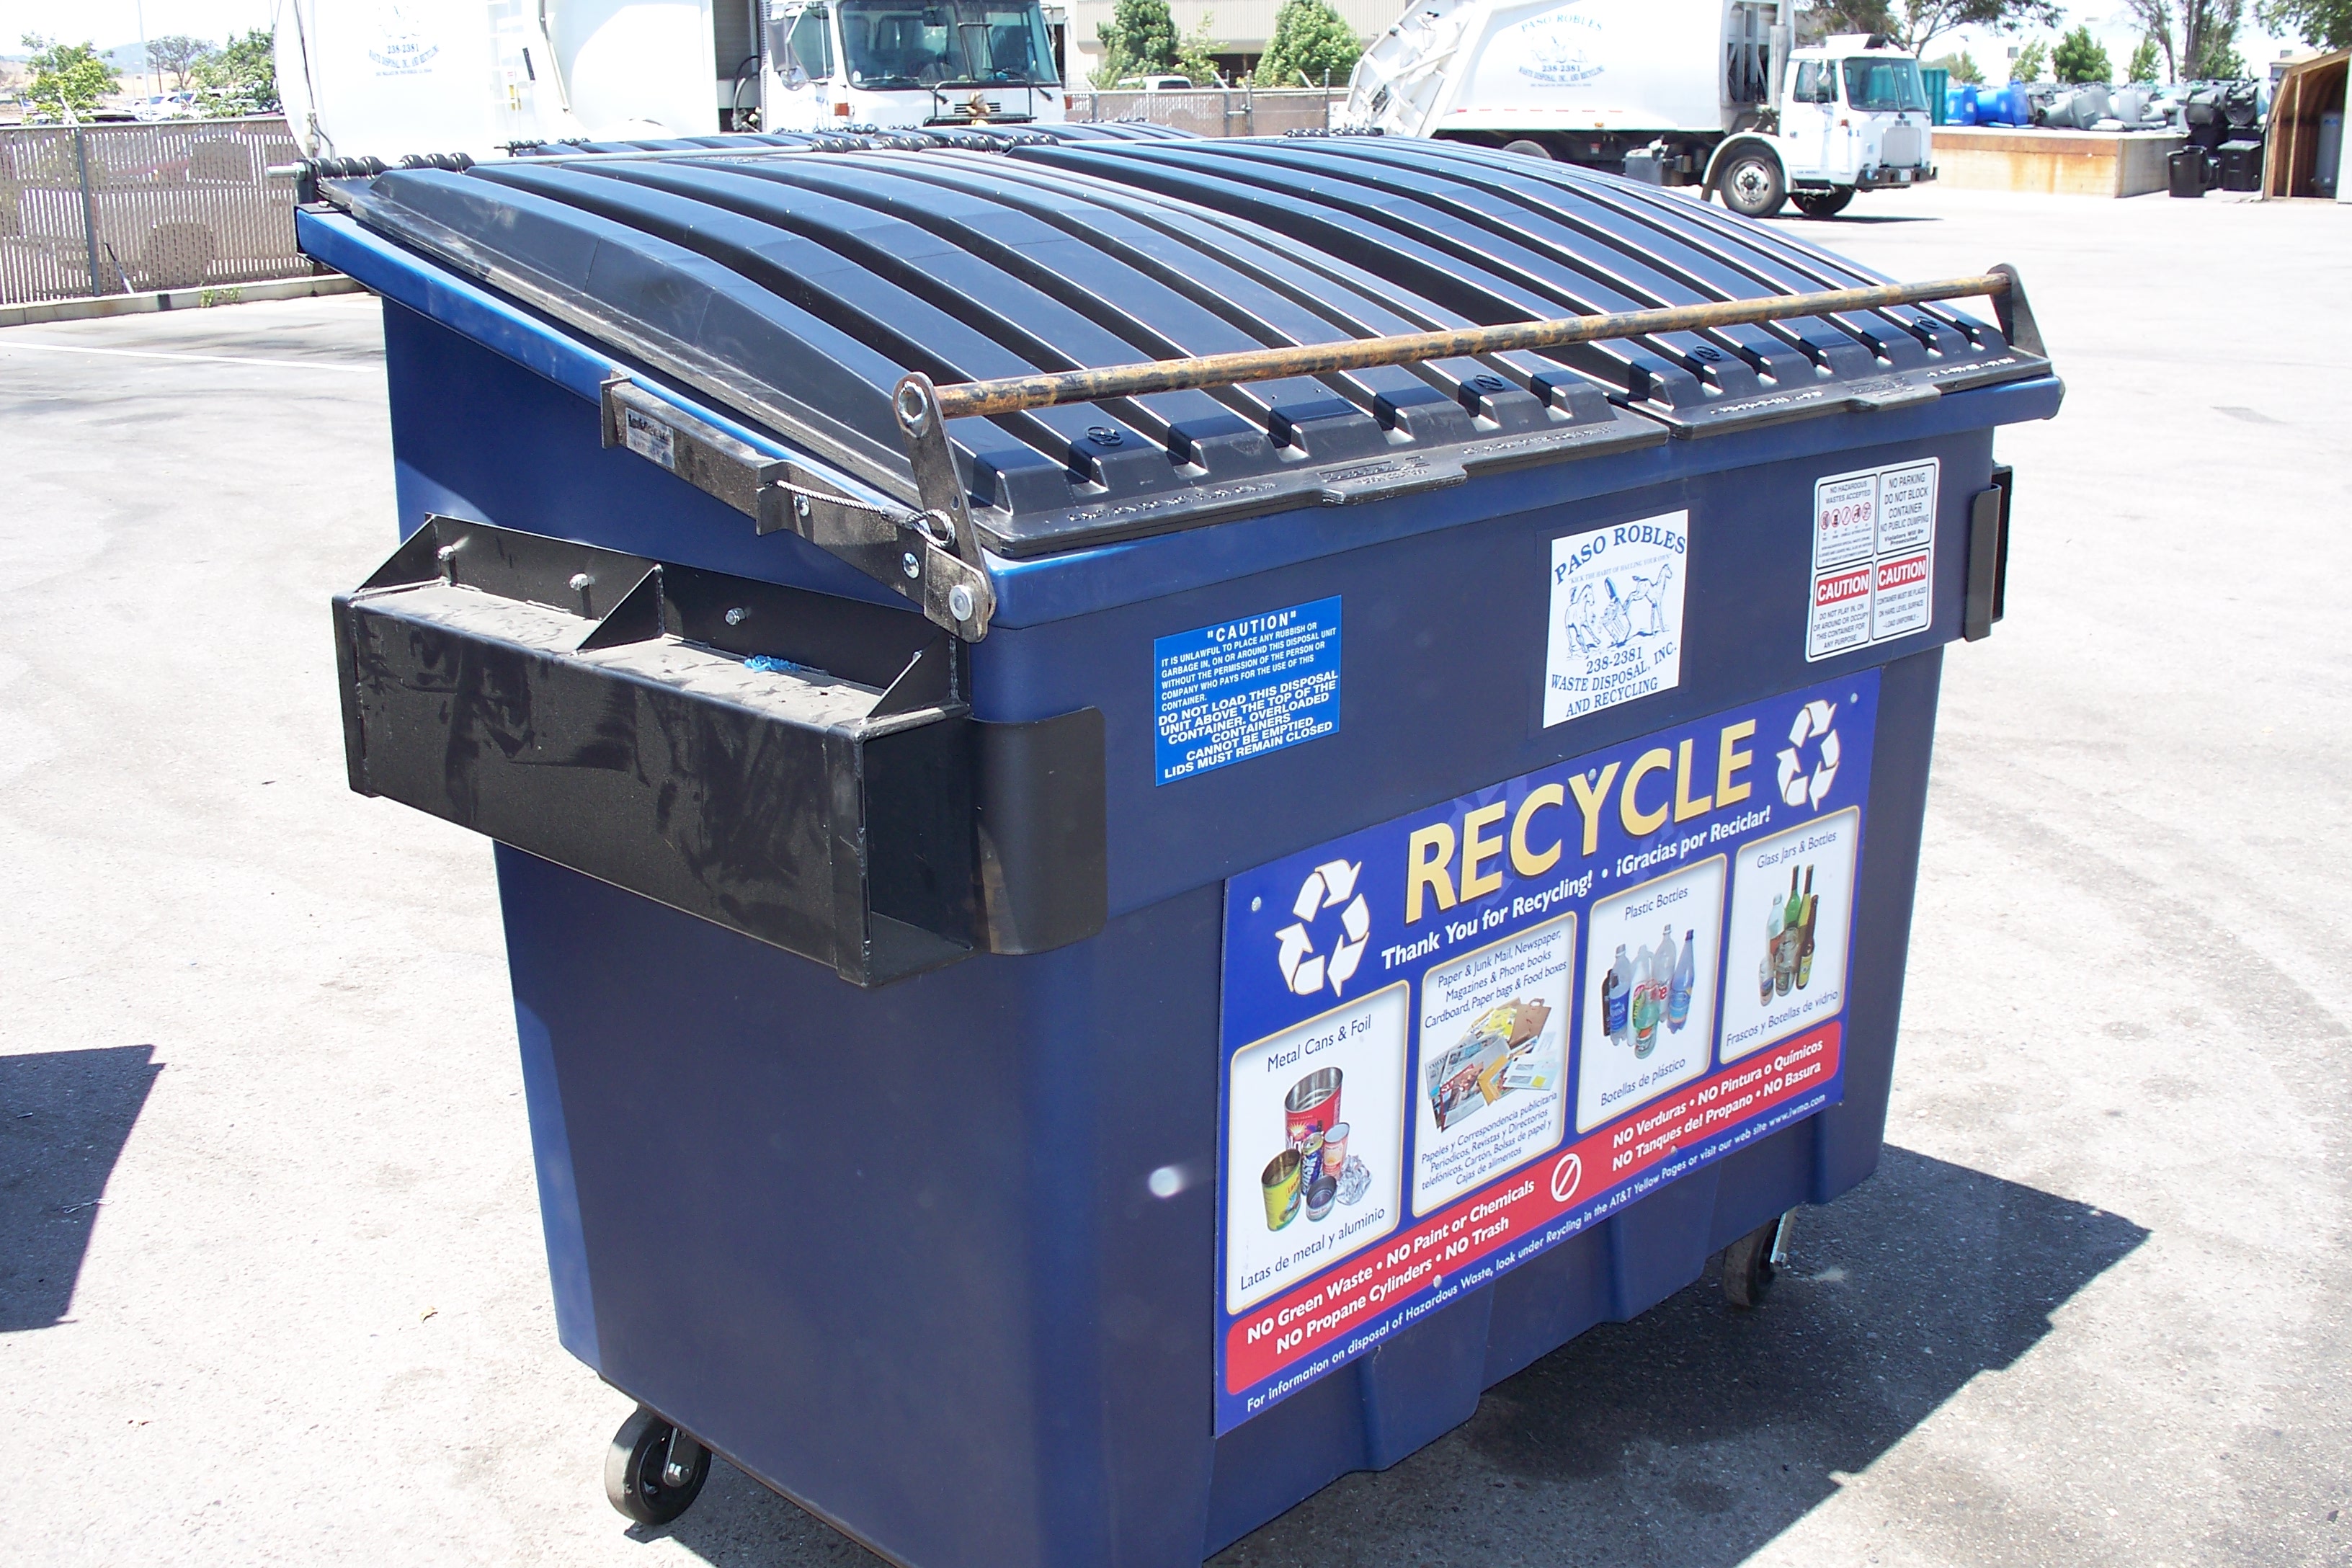 Community recycling bin